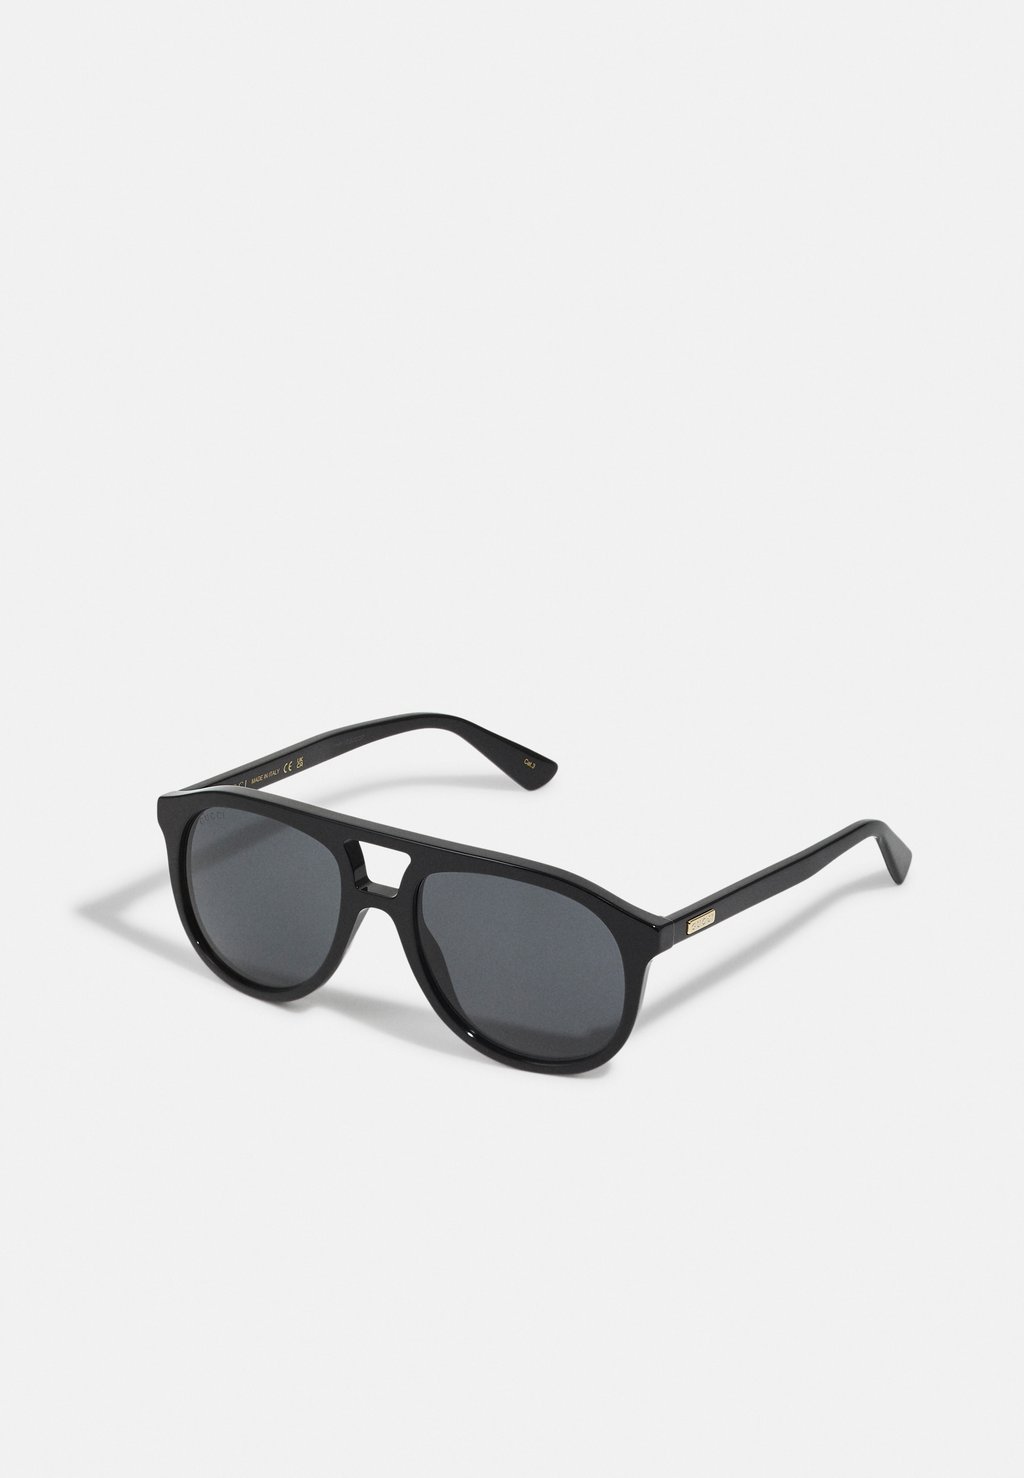 Солнцезащитные очки Unisex Gucci, цвет black/grey солнцезащитные очки unisex gucci цвет black silver coloured